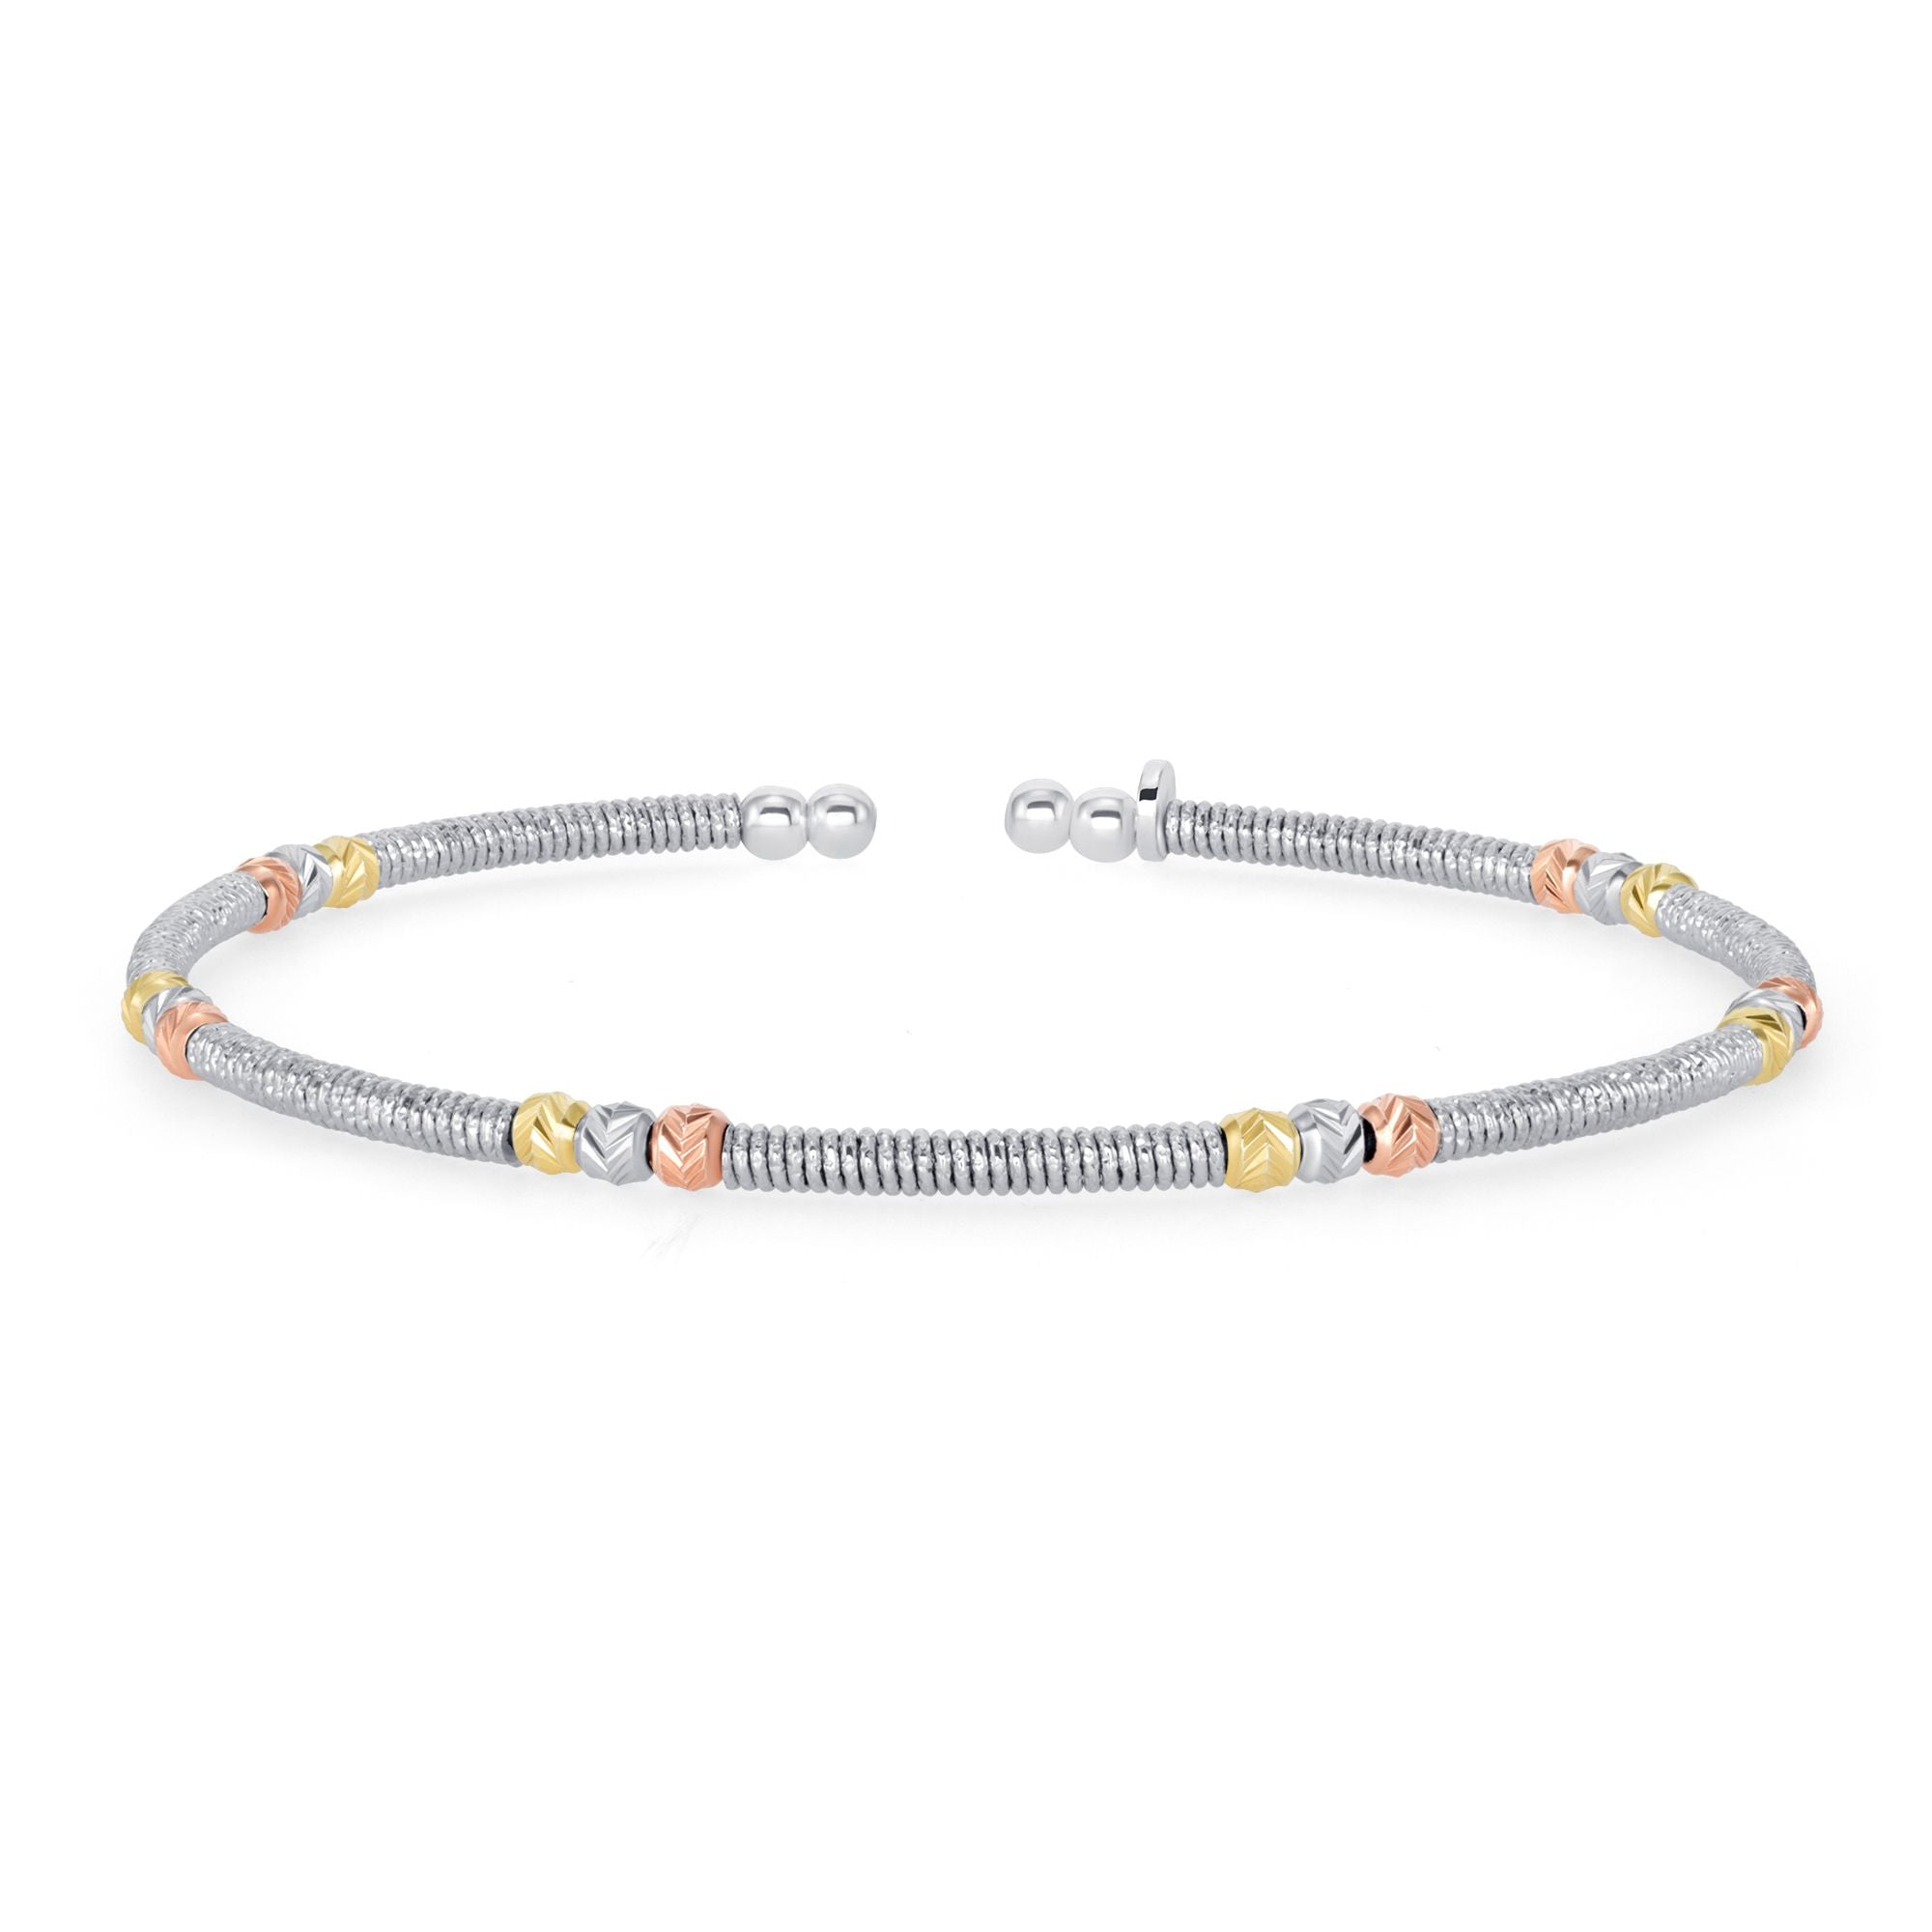 925 Sterling Silver Diamond Cut Tri Tone Bead Wire Wrapped Cuff Bracelet